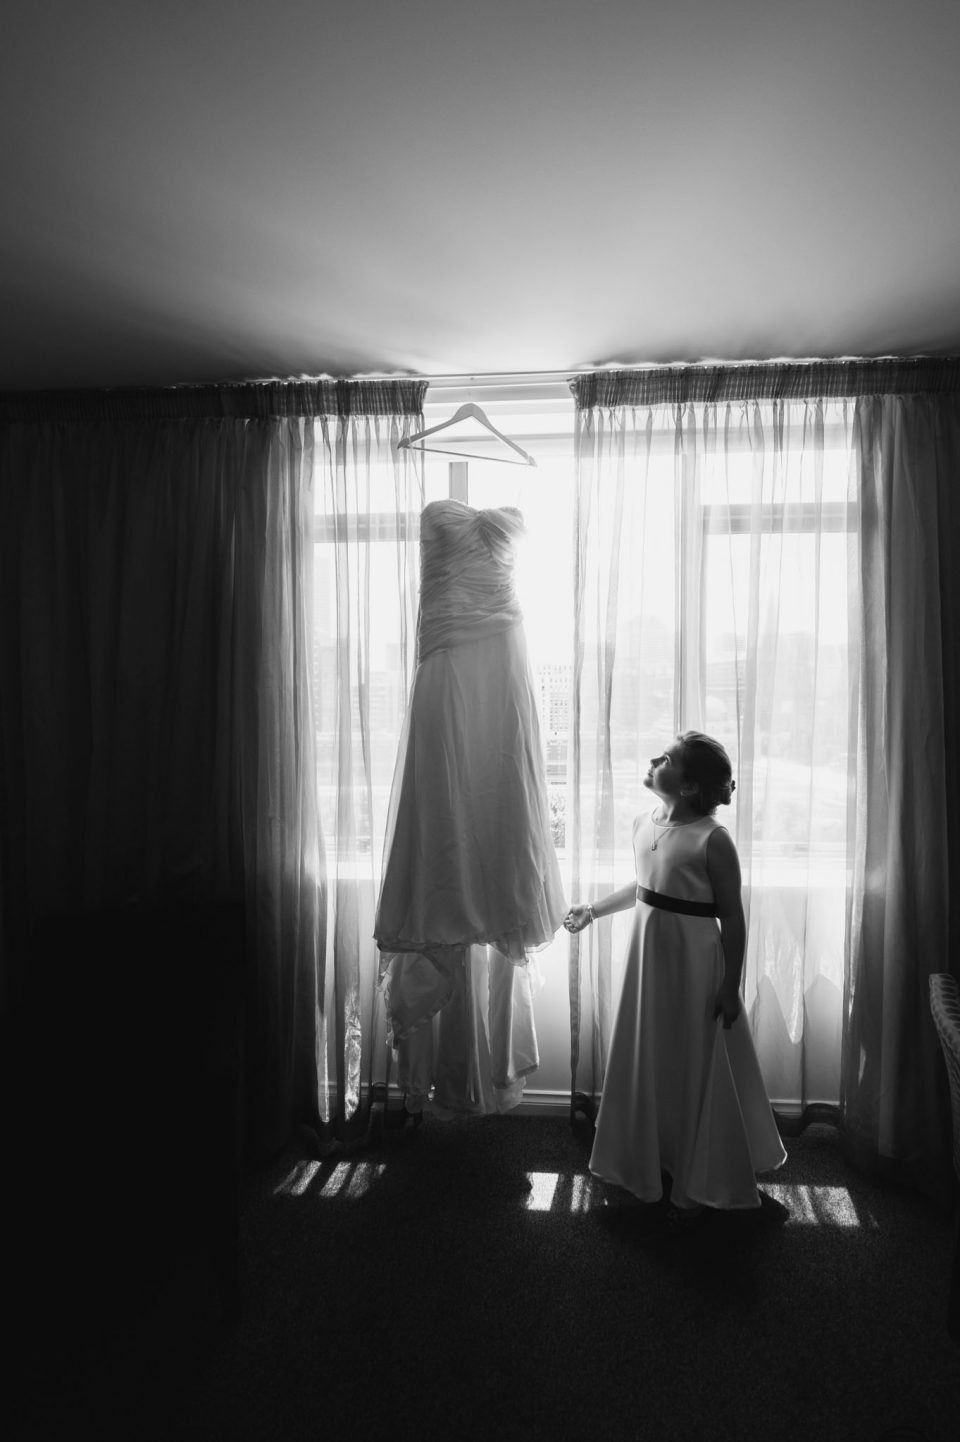 Wedding dress and flower girl